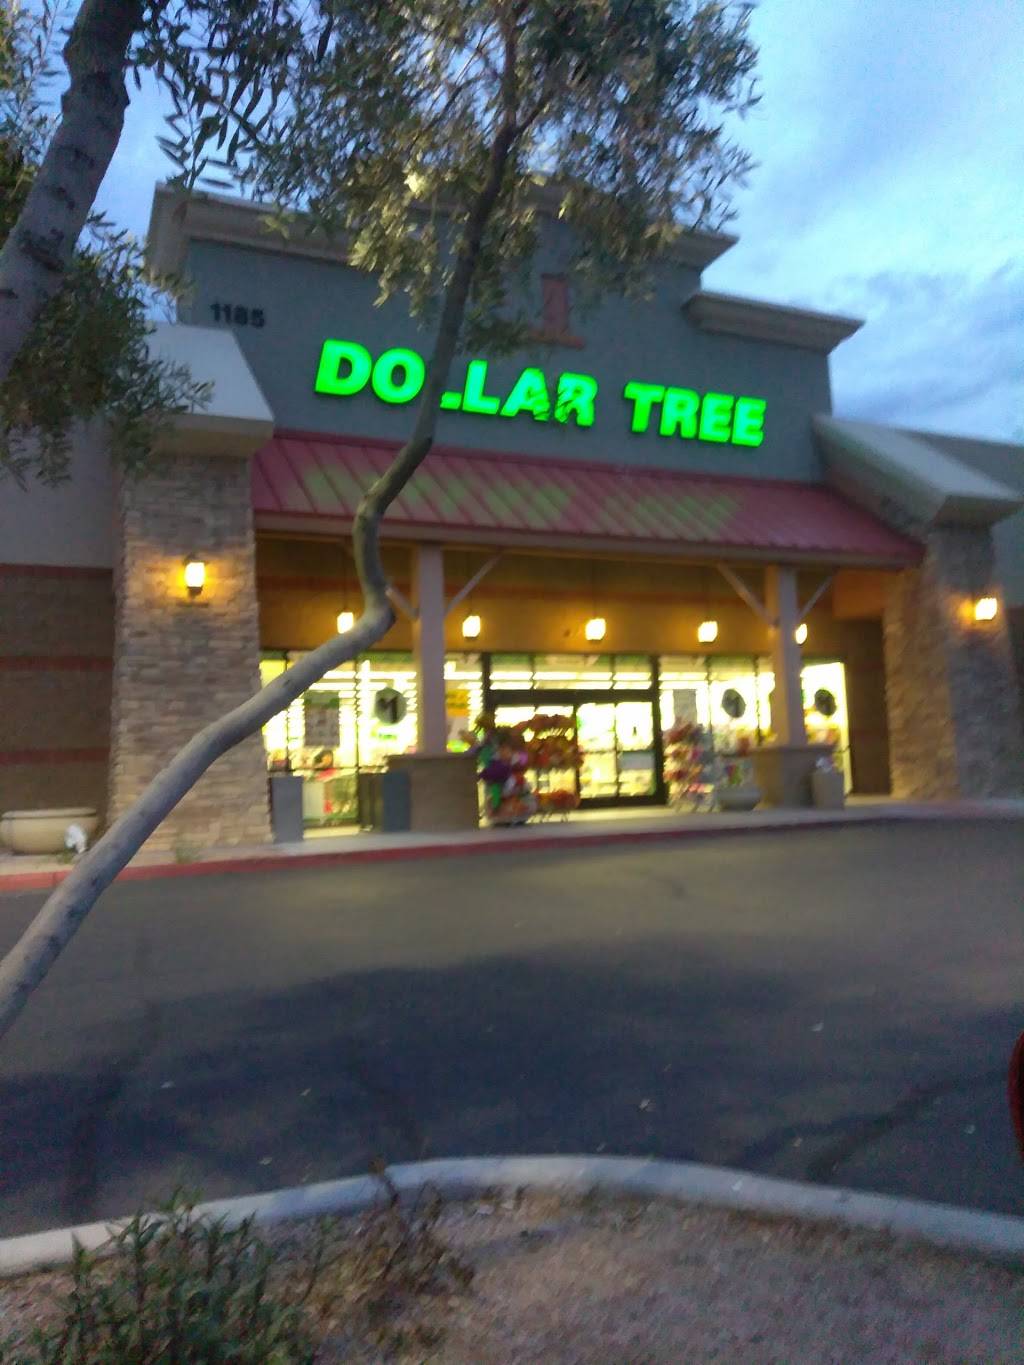 Dollar Tree | 1185 S Arizona Ave, Chandler, AZ 85286, USA | Phone: (480) 308-2545